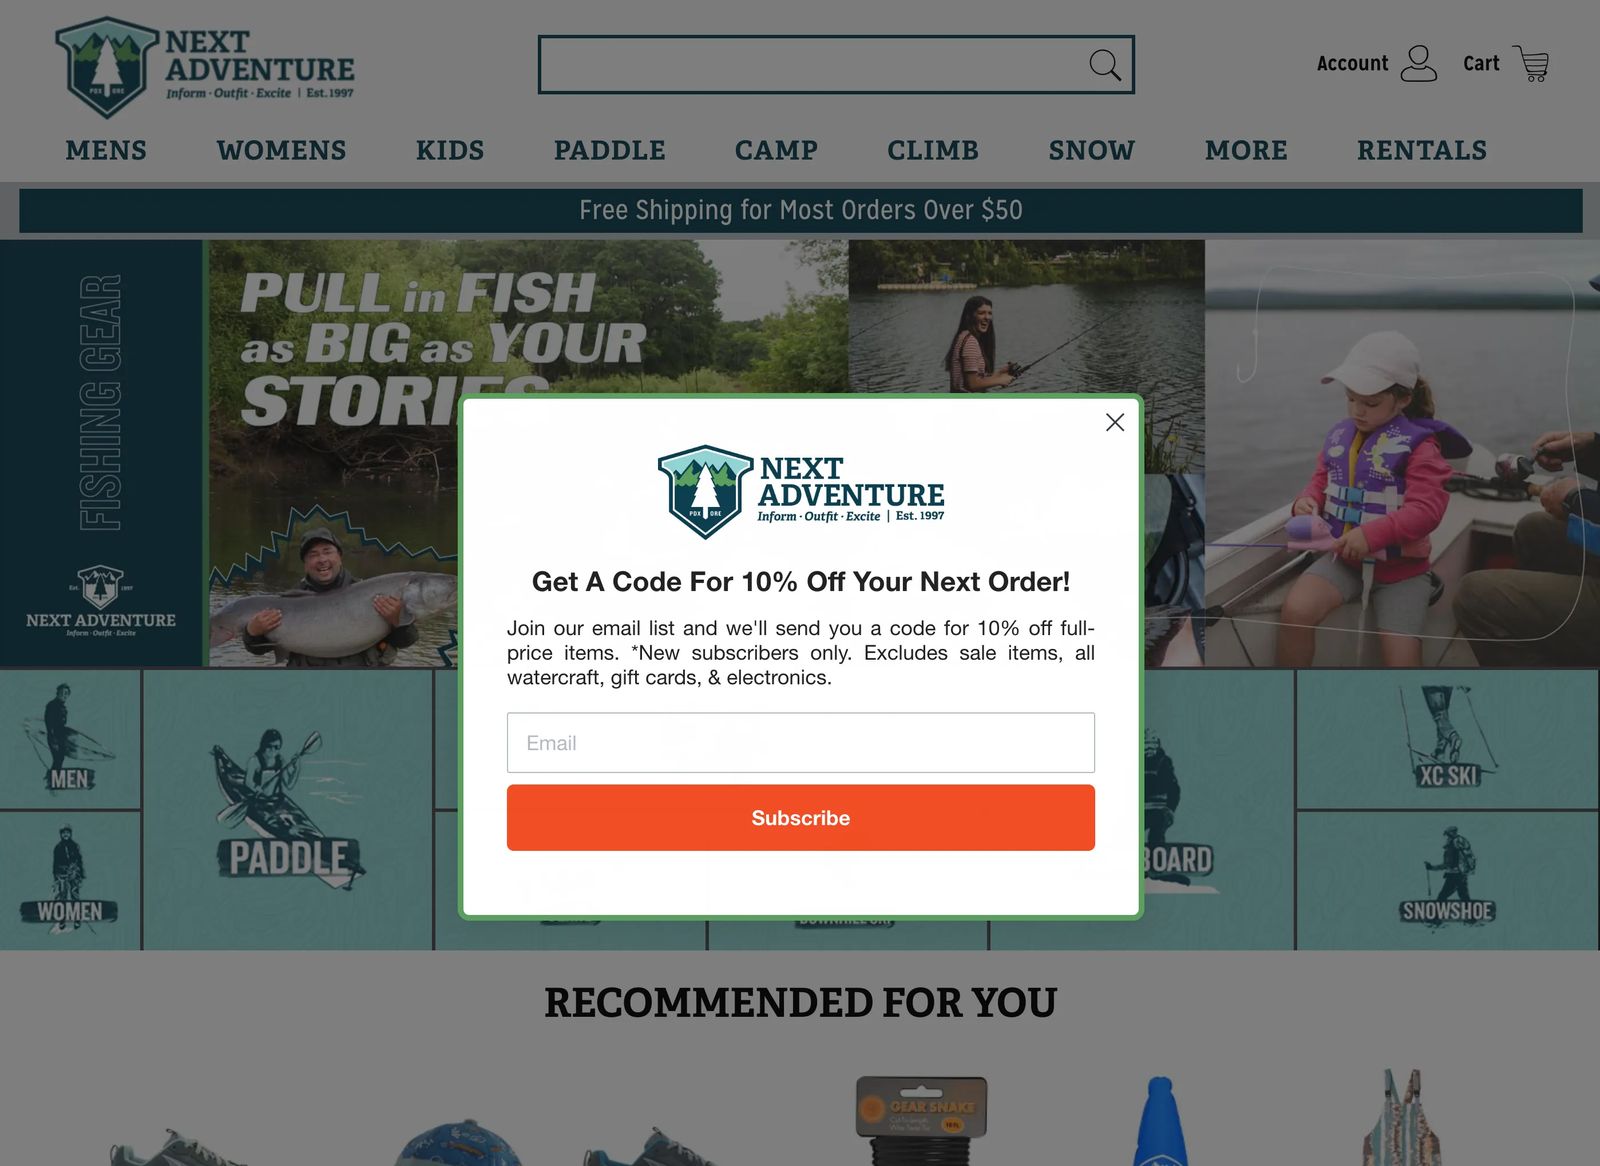 Discount coupon lead magnet example: Next Adventure online retailer